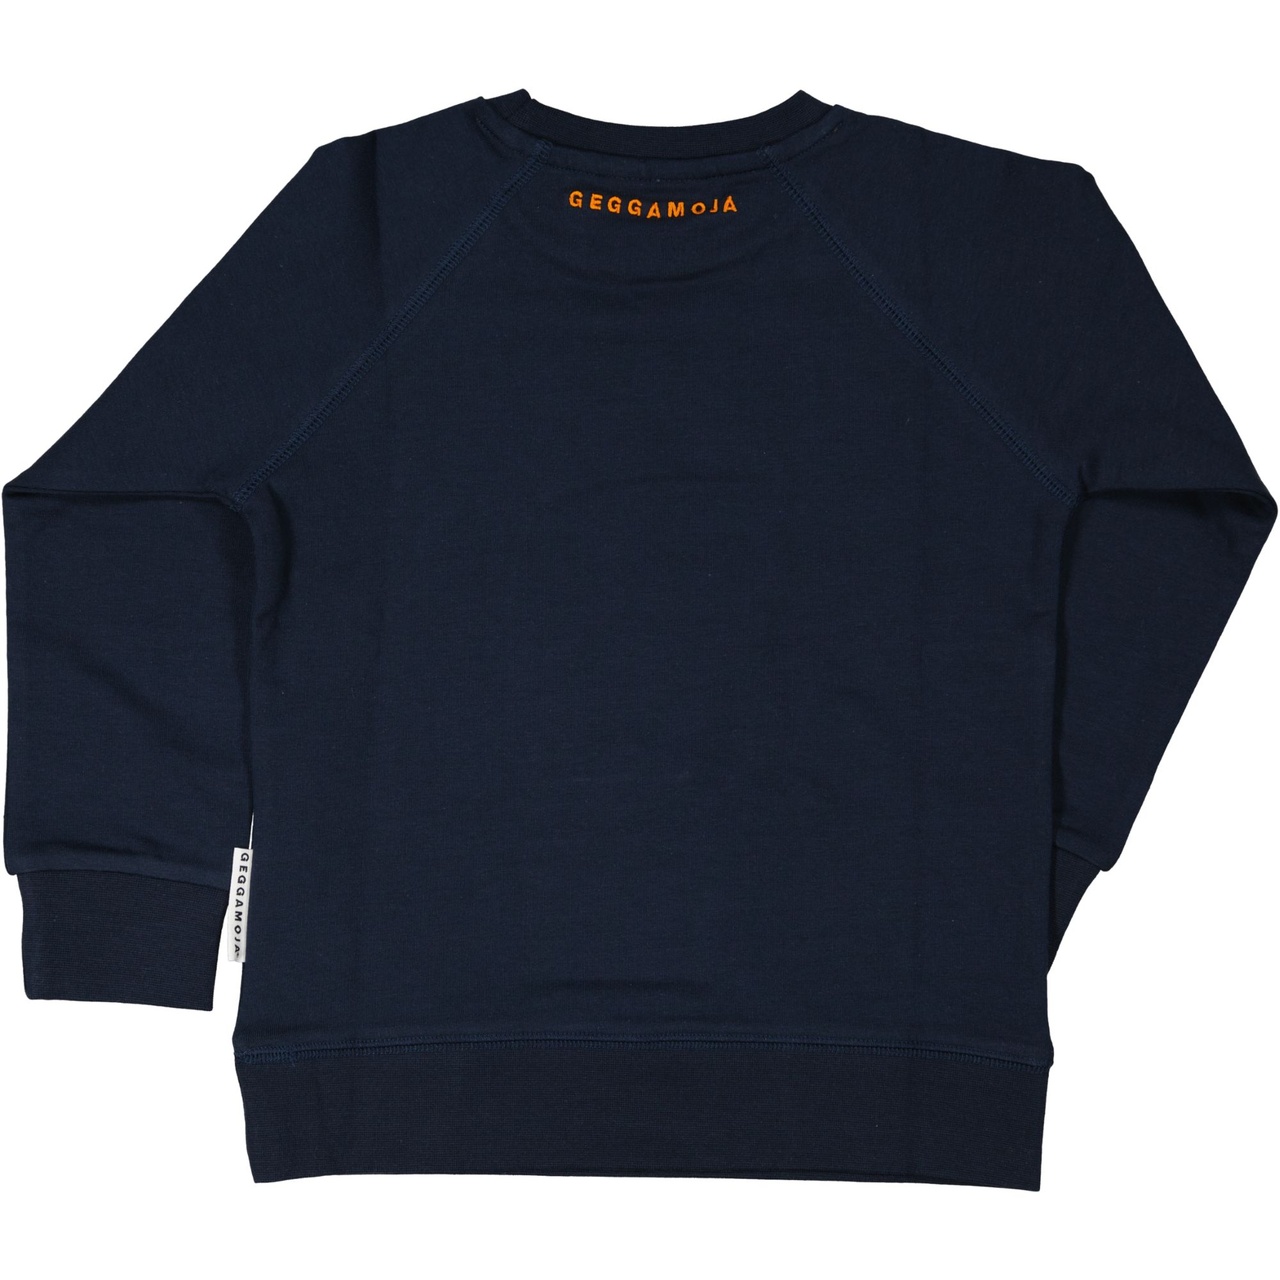 College sweater Navy  122/128